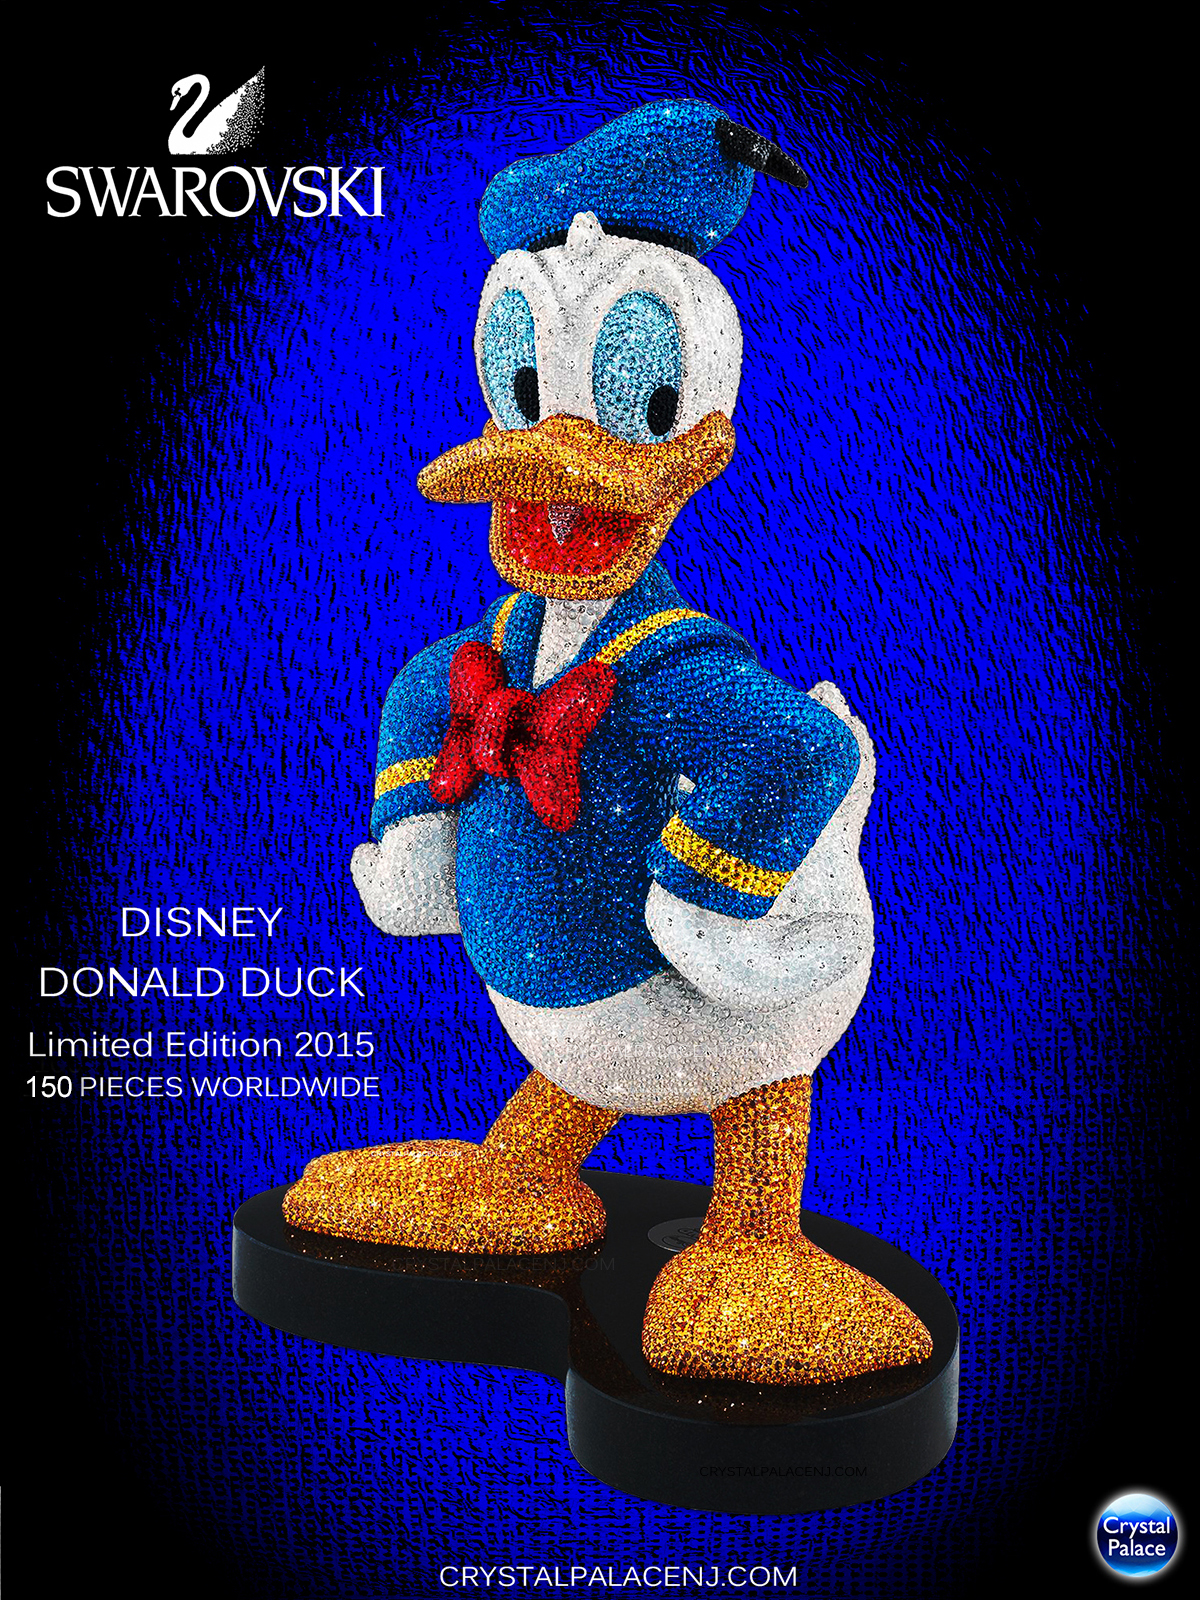  Swarovski Disney Donald Duck Limited Edition 2015